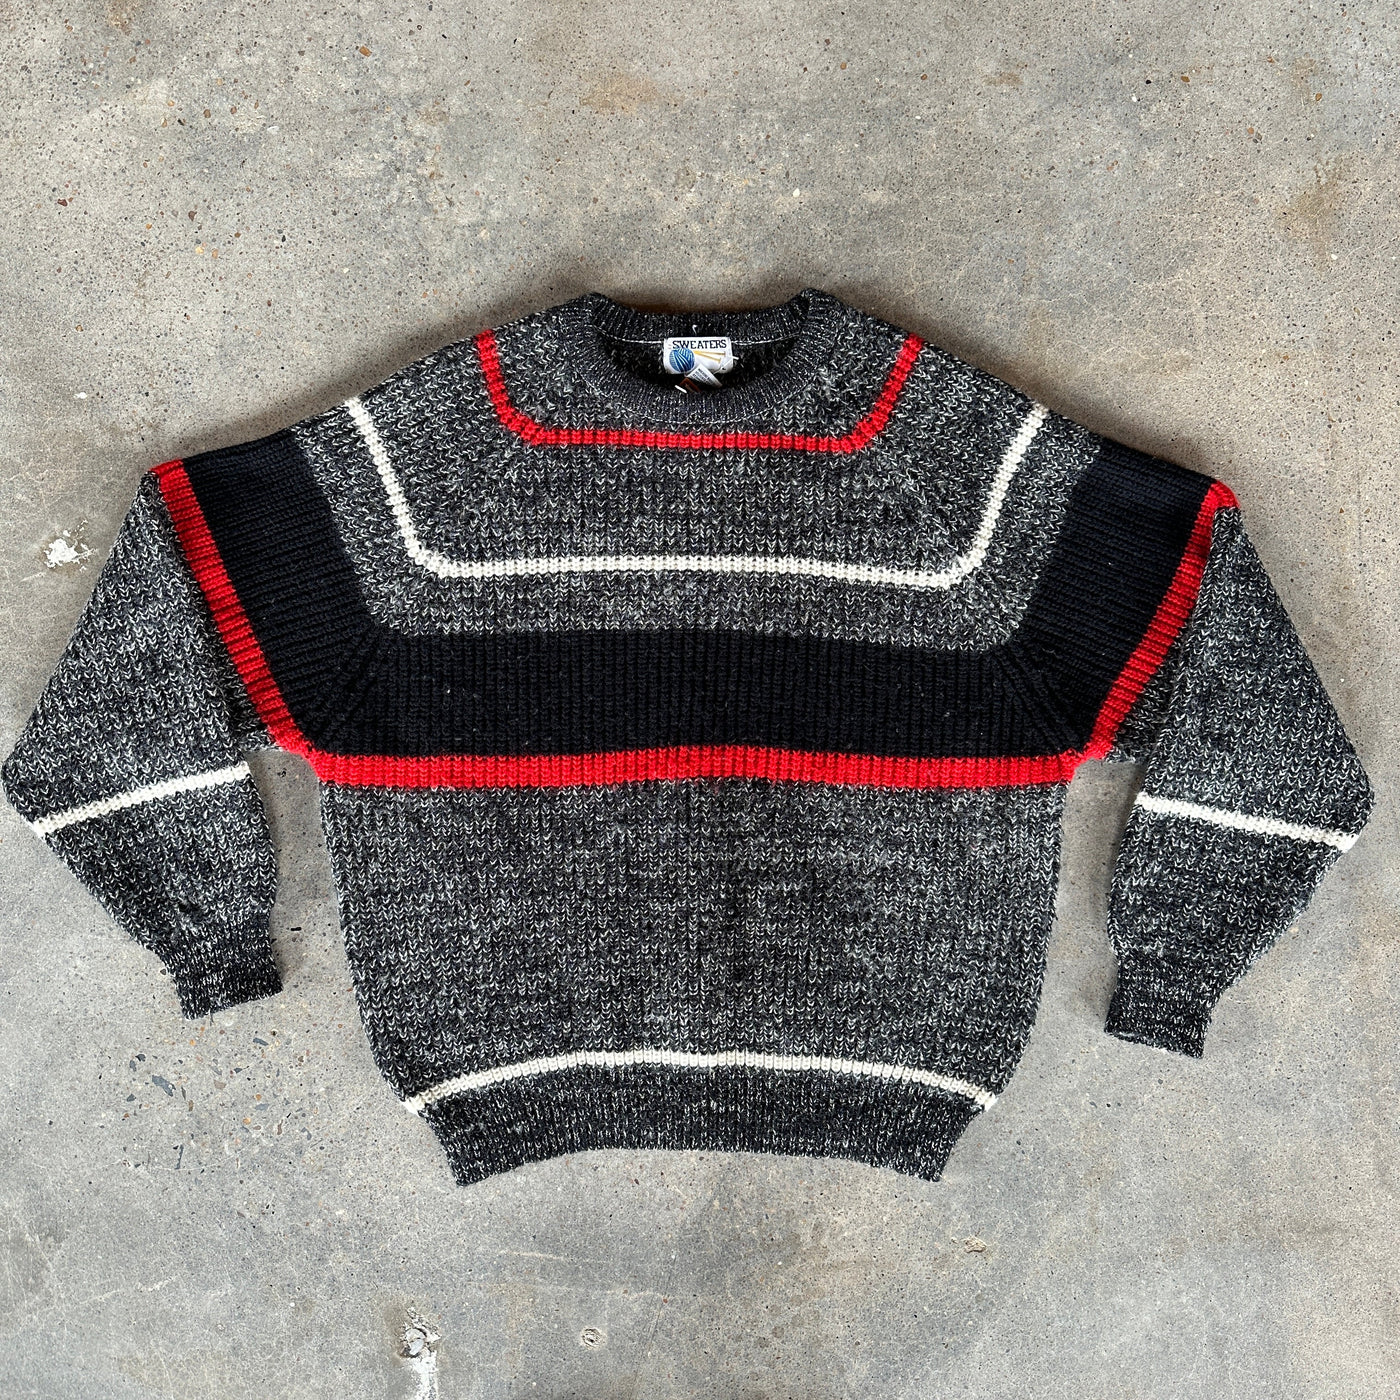 Vintage “Sweaters” Sweater